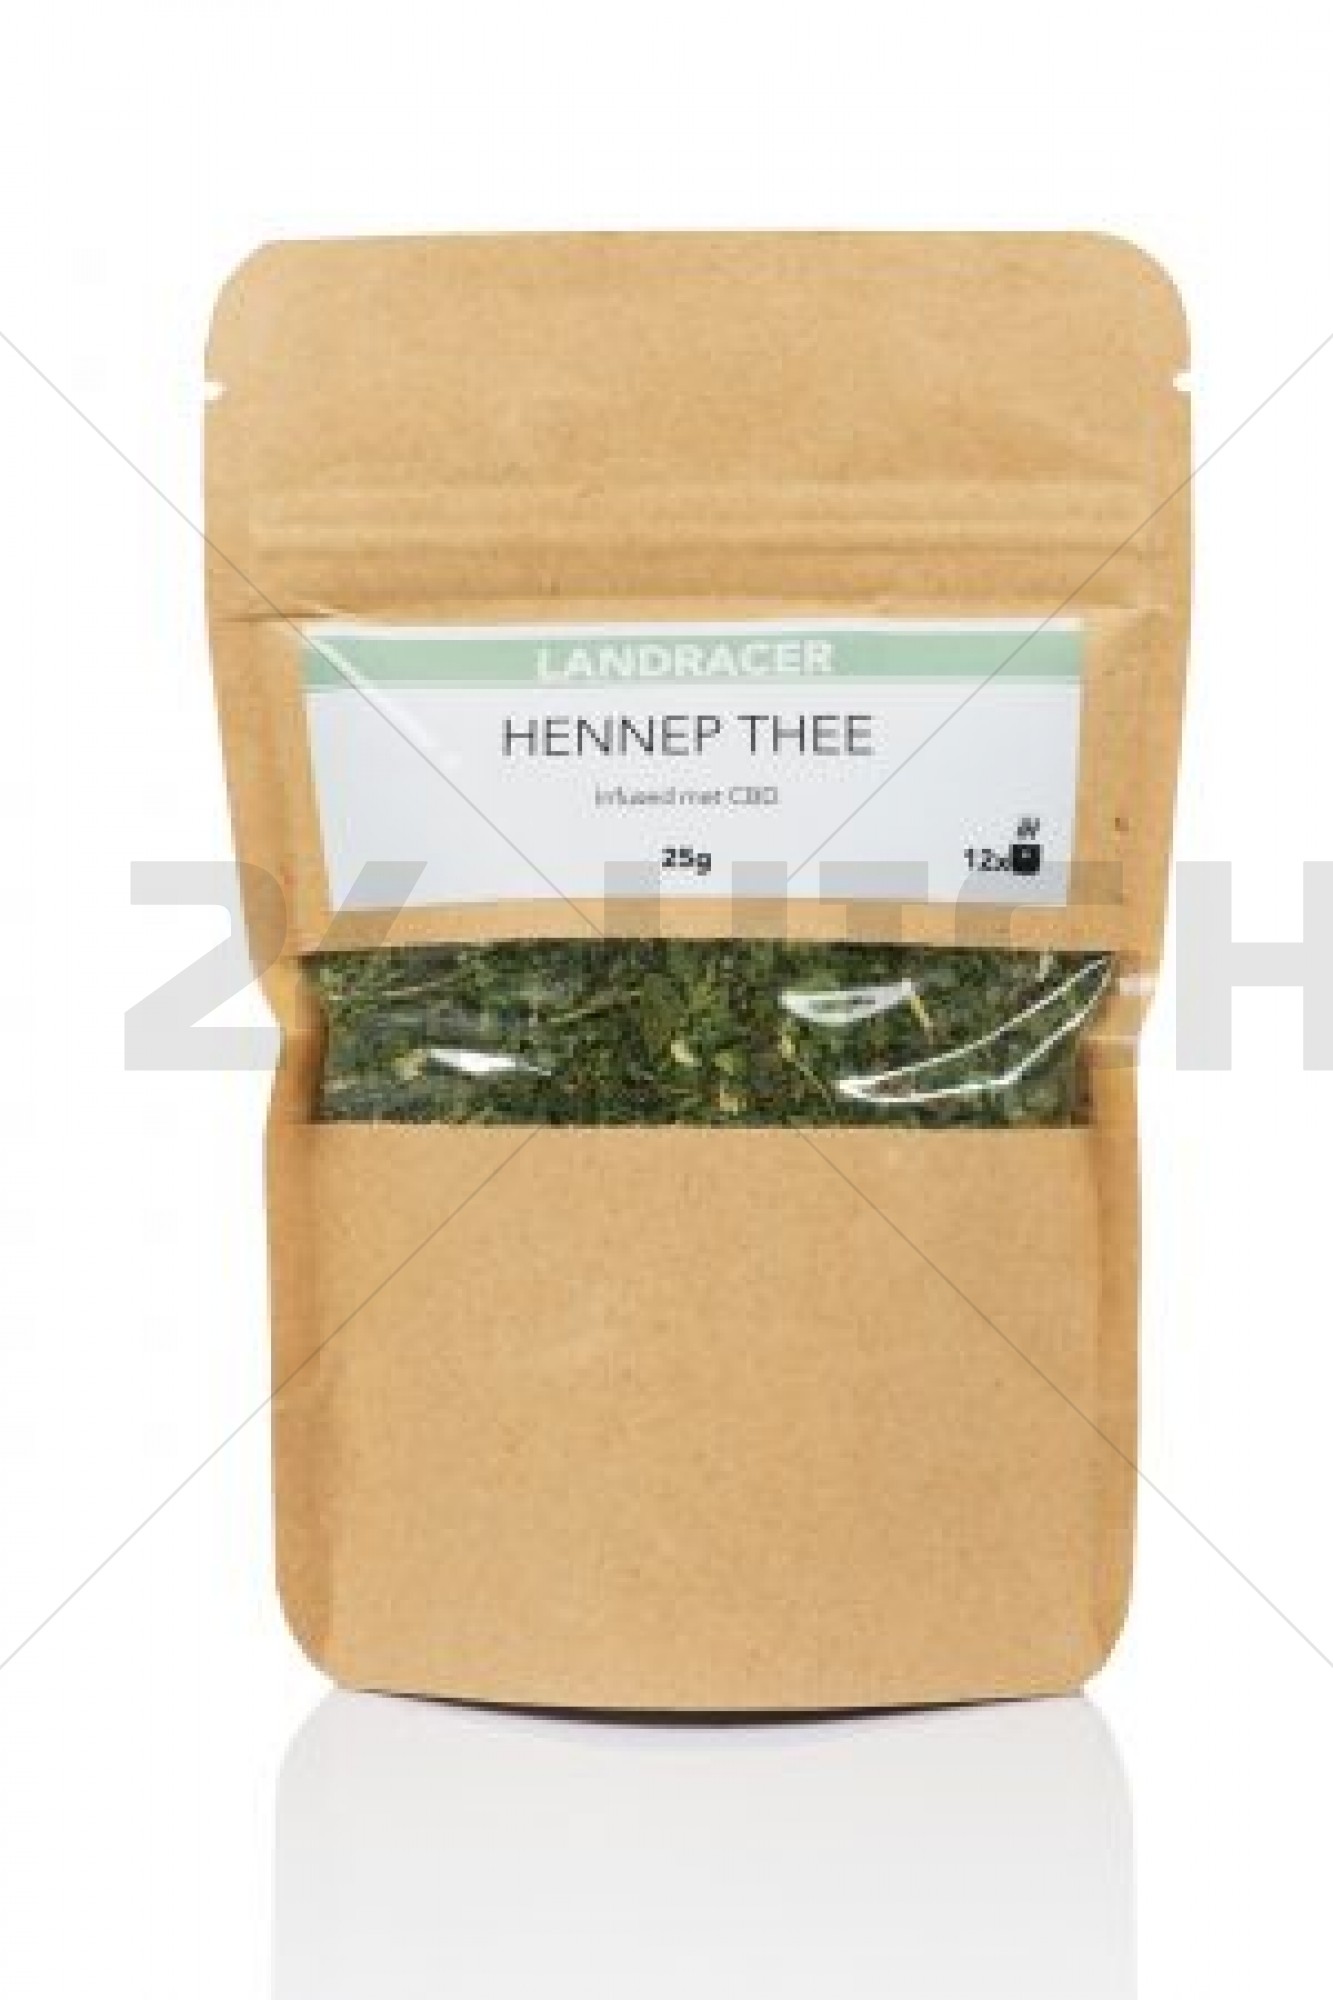 Landracer Hemp tea infused with Cannabidiol